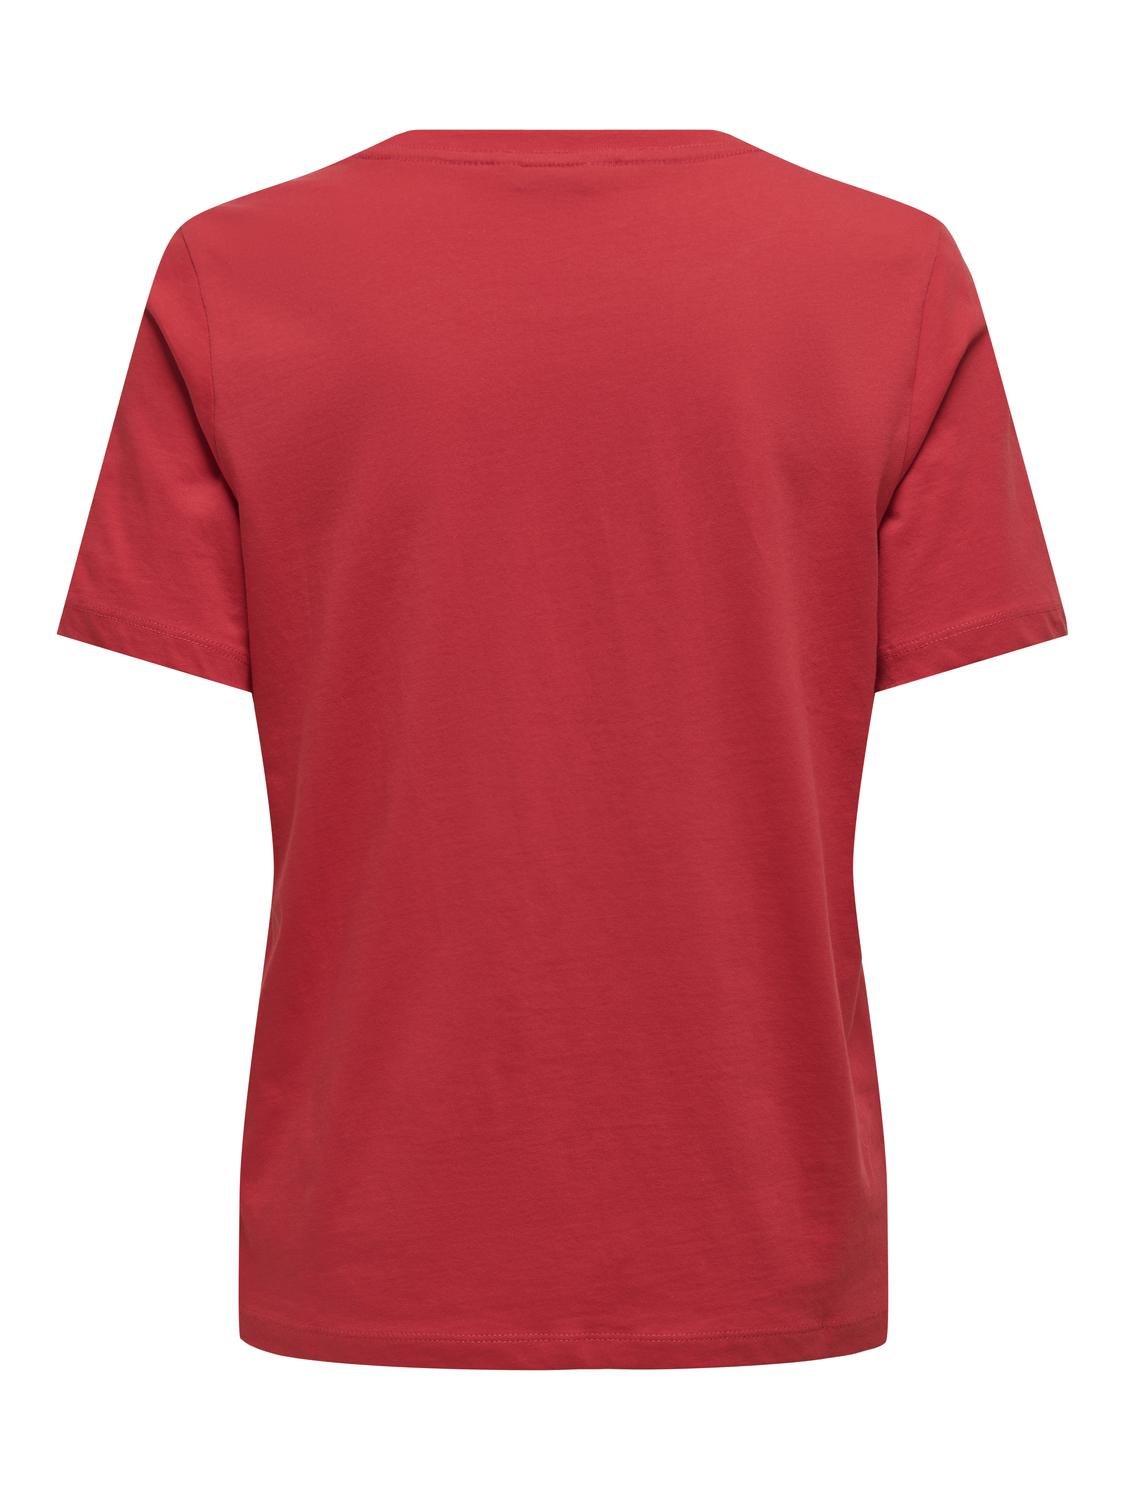 PGAMAZE T-Shirt - True Red